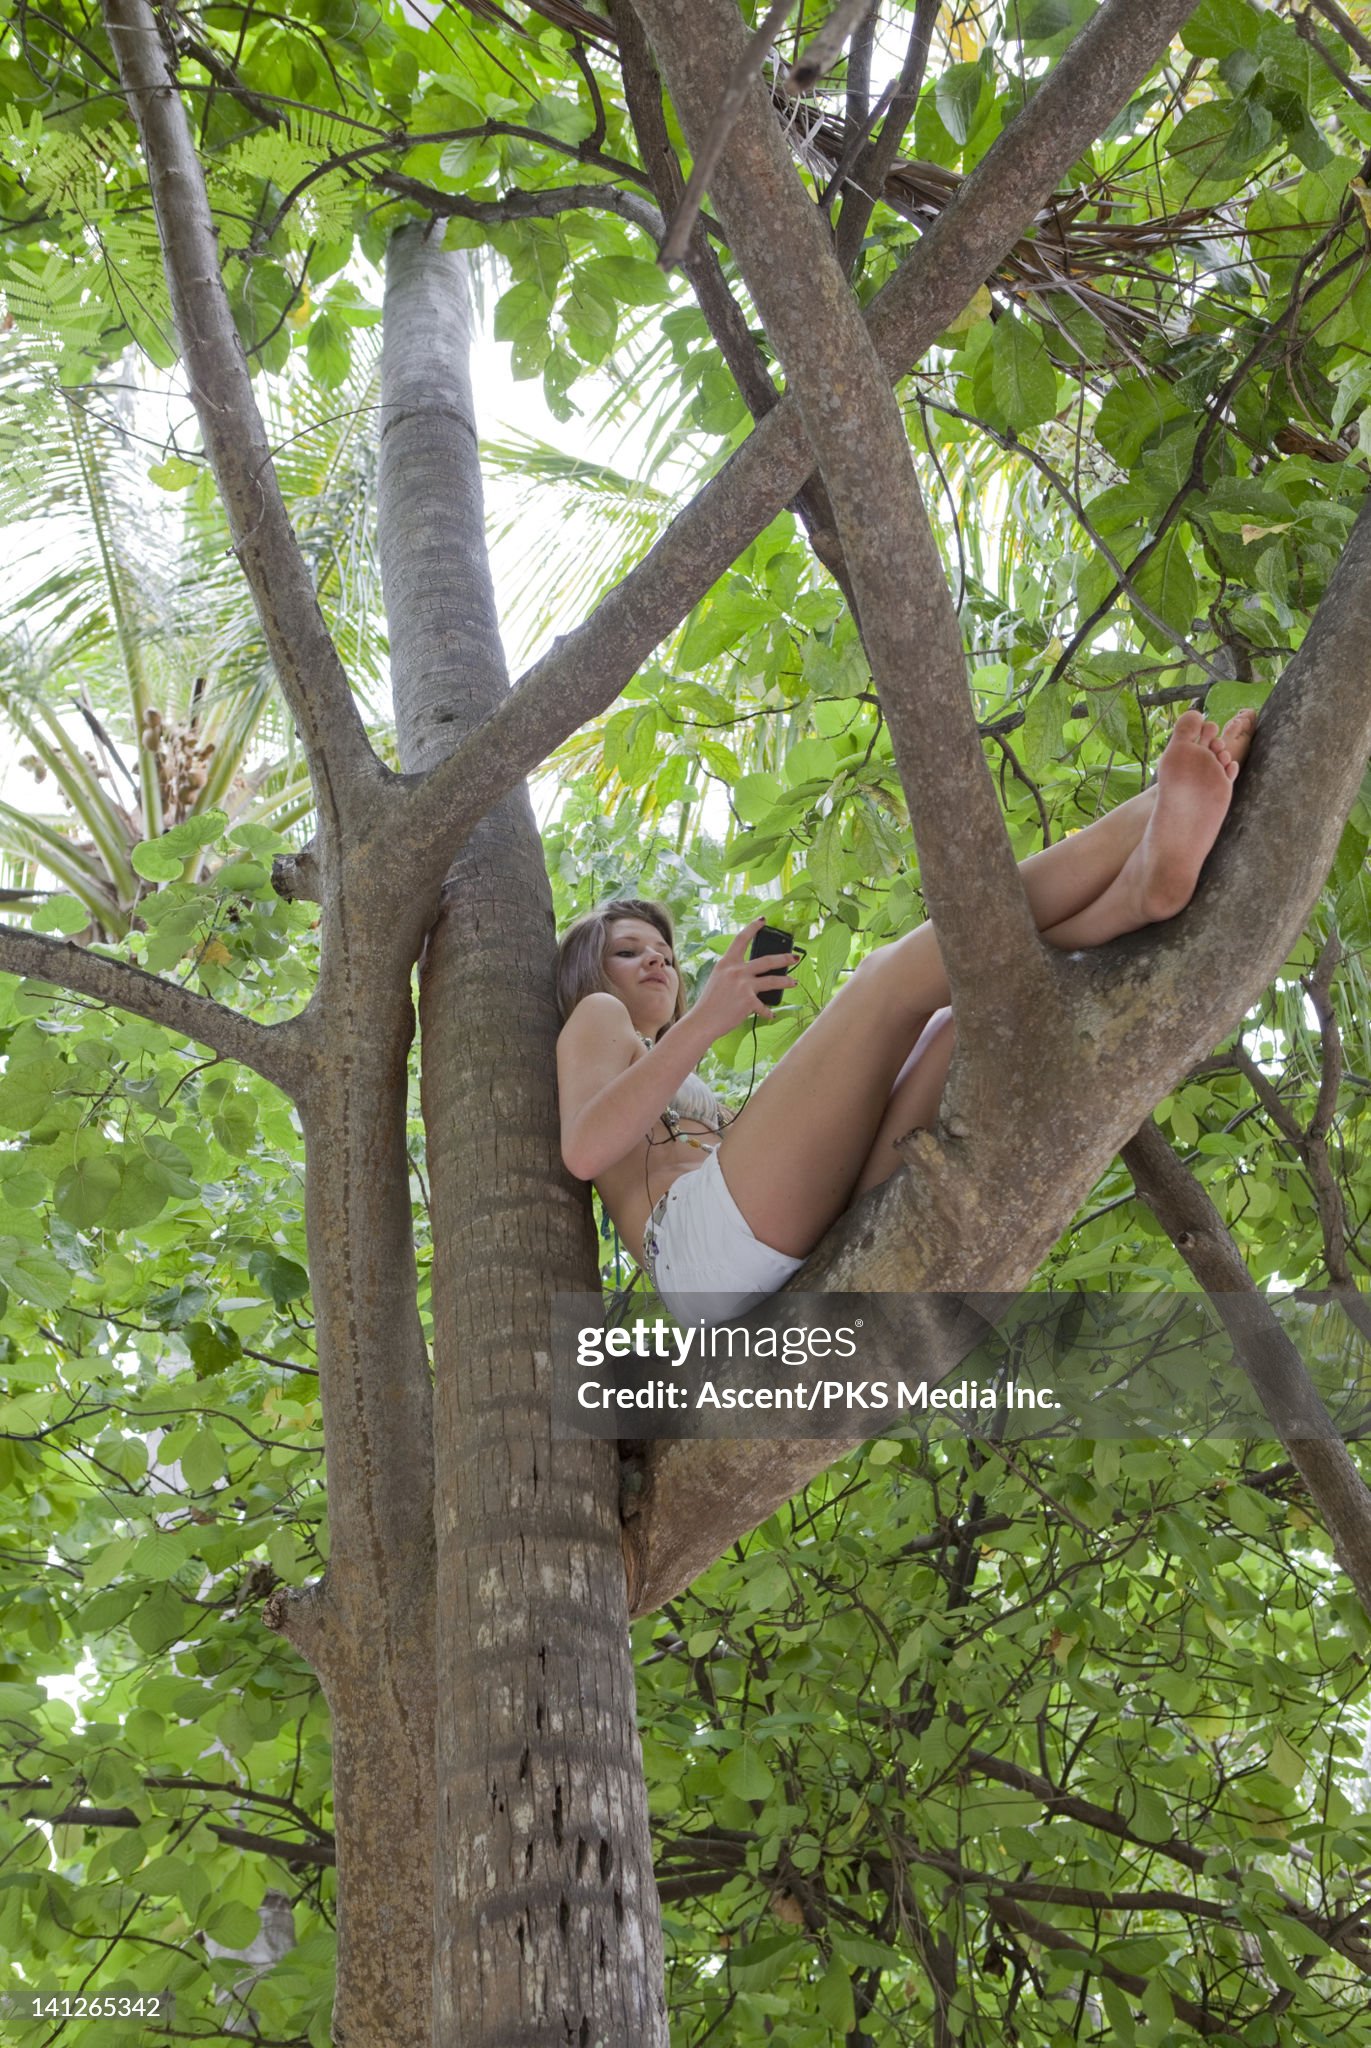 https://media.gettyimages.com/id/141265342/photo/teenage-girl-sits-in-jungle-canopy-sends-text.jpg?s=2048x2048&amp;w=gi&amp;k=20&amp;c=k7F4mlOjHJWs2ncyzn3cS08ETgVfB87zeeegPIQ4H1A=